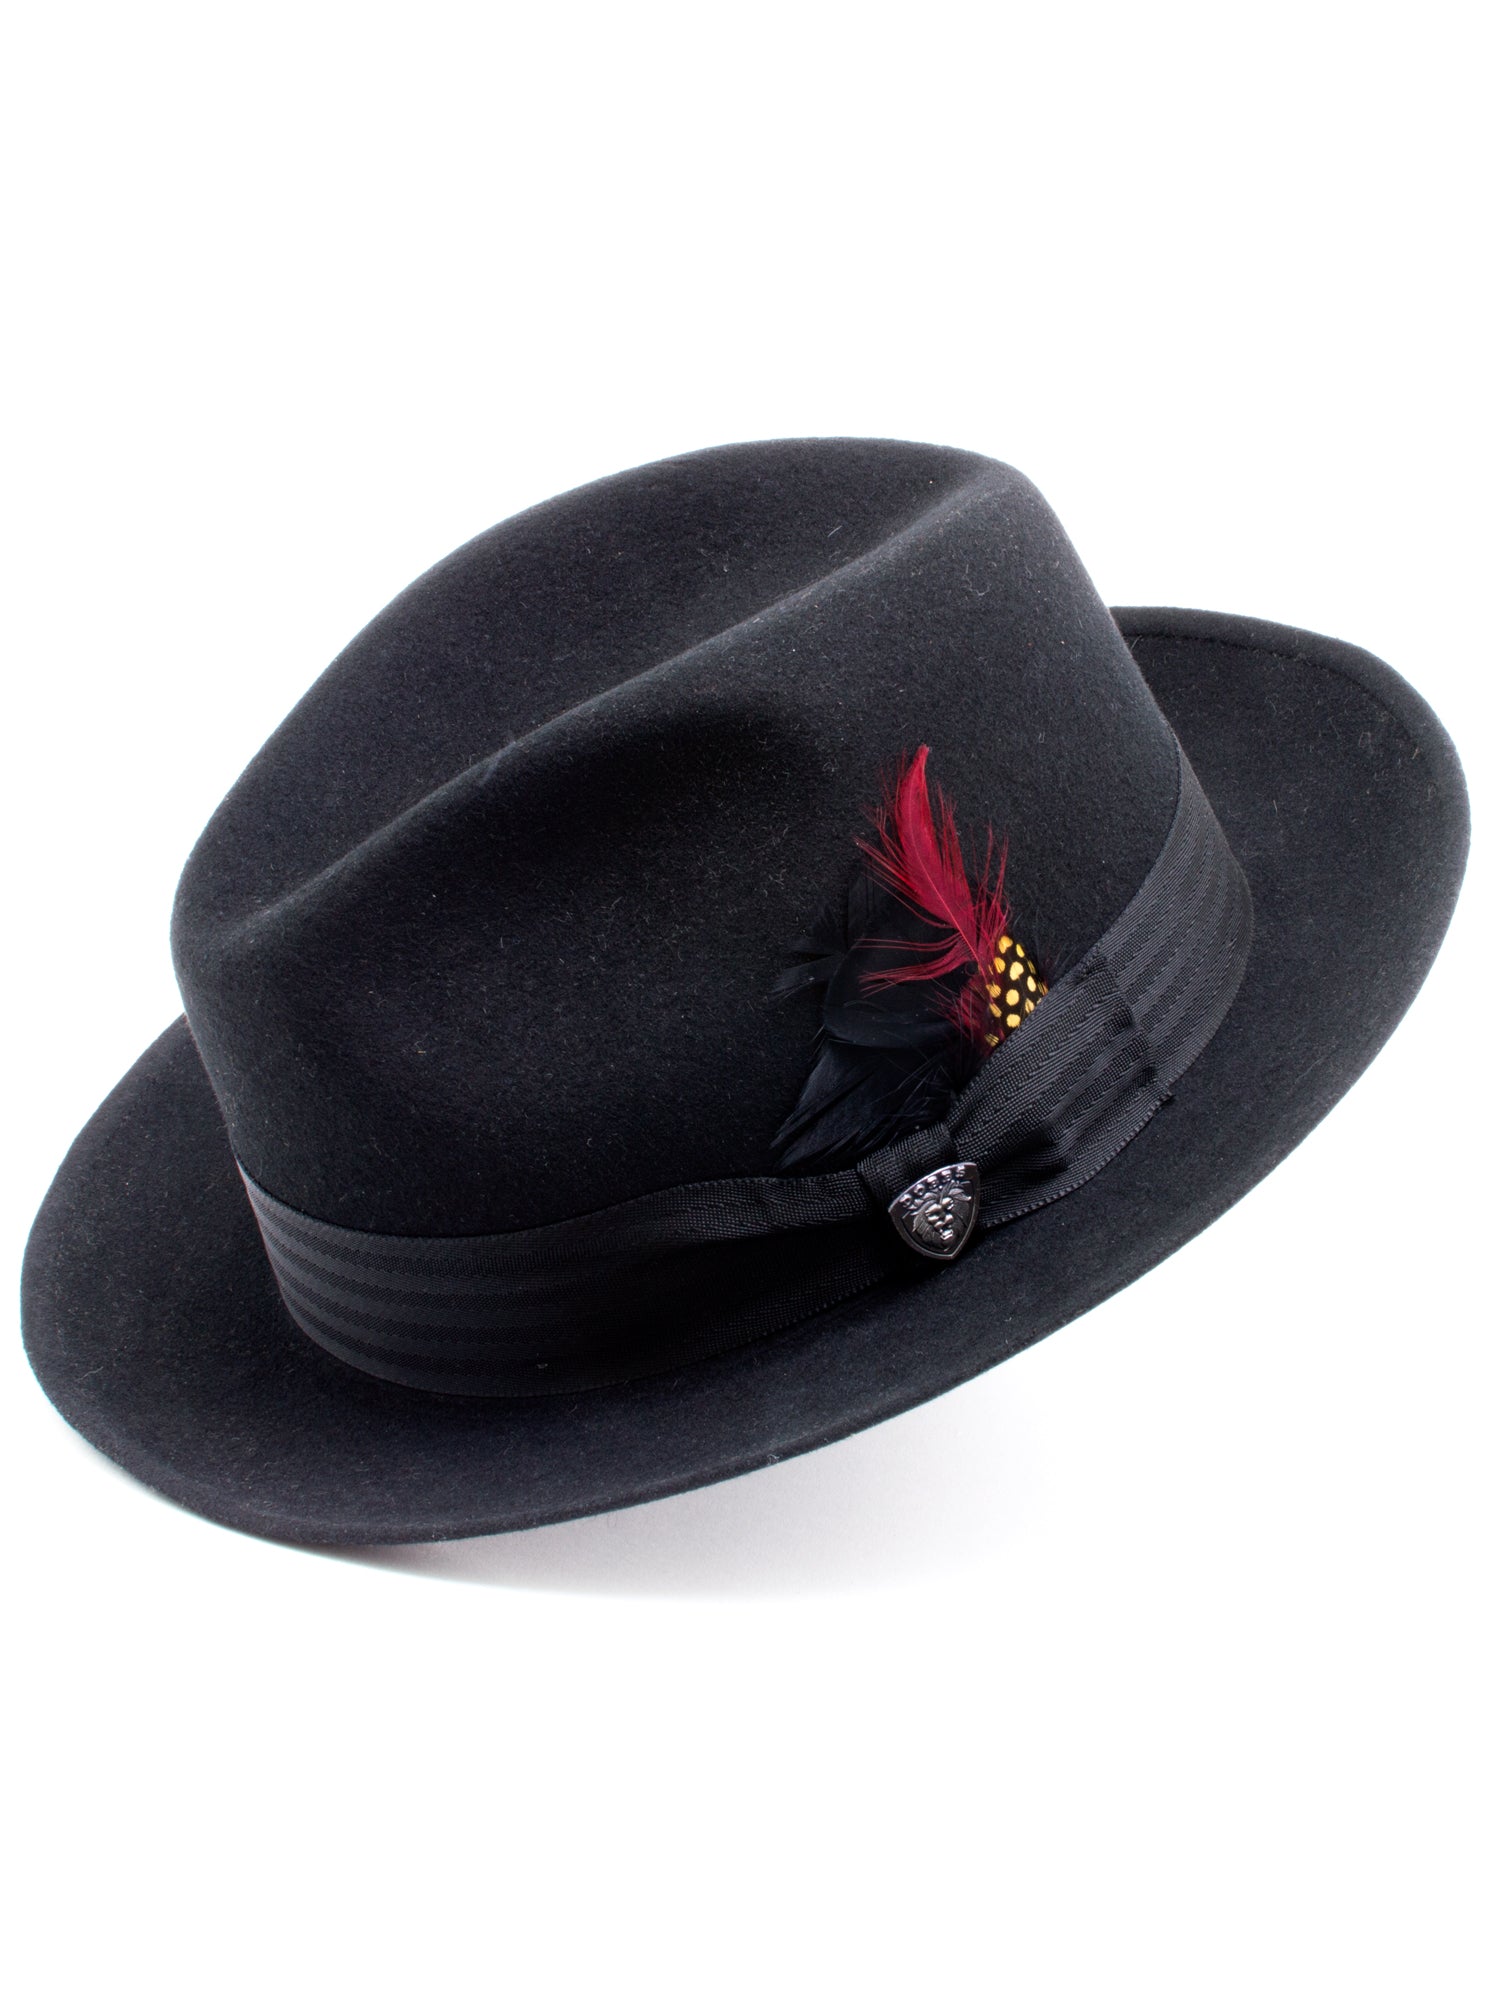 Dobbs 100% Wool Felt Glen Cove Hats in Black